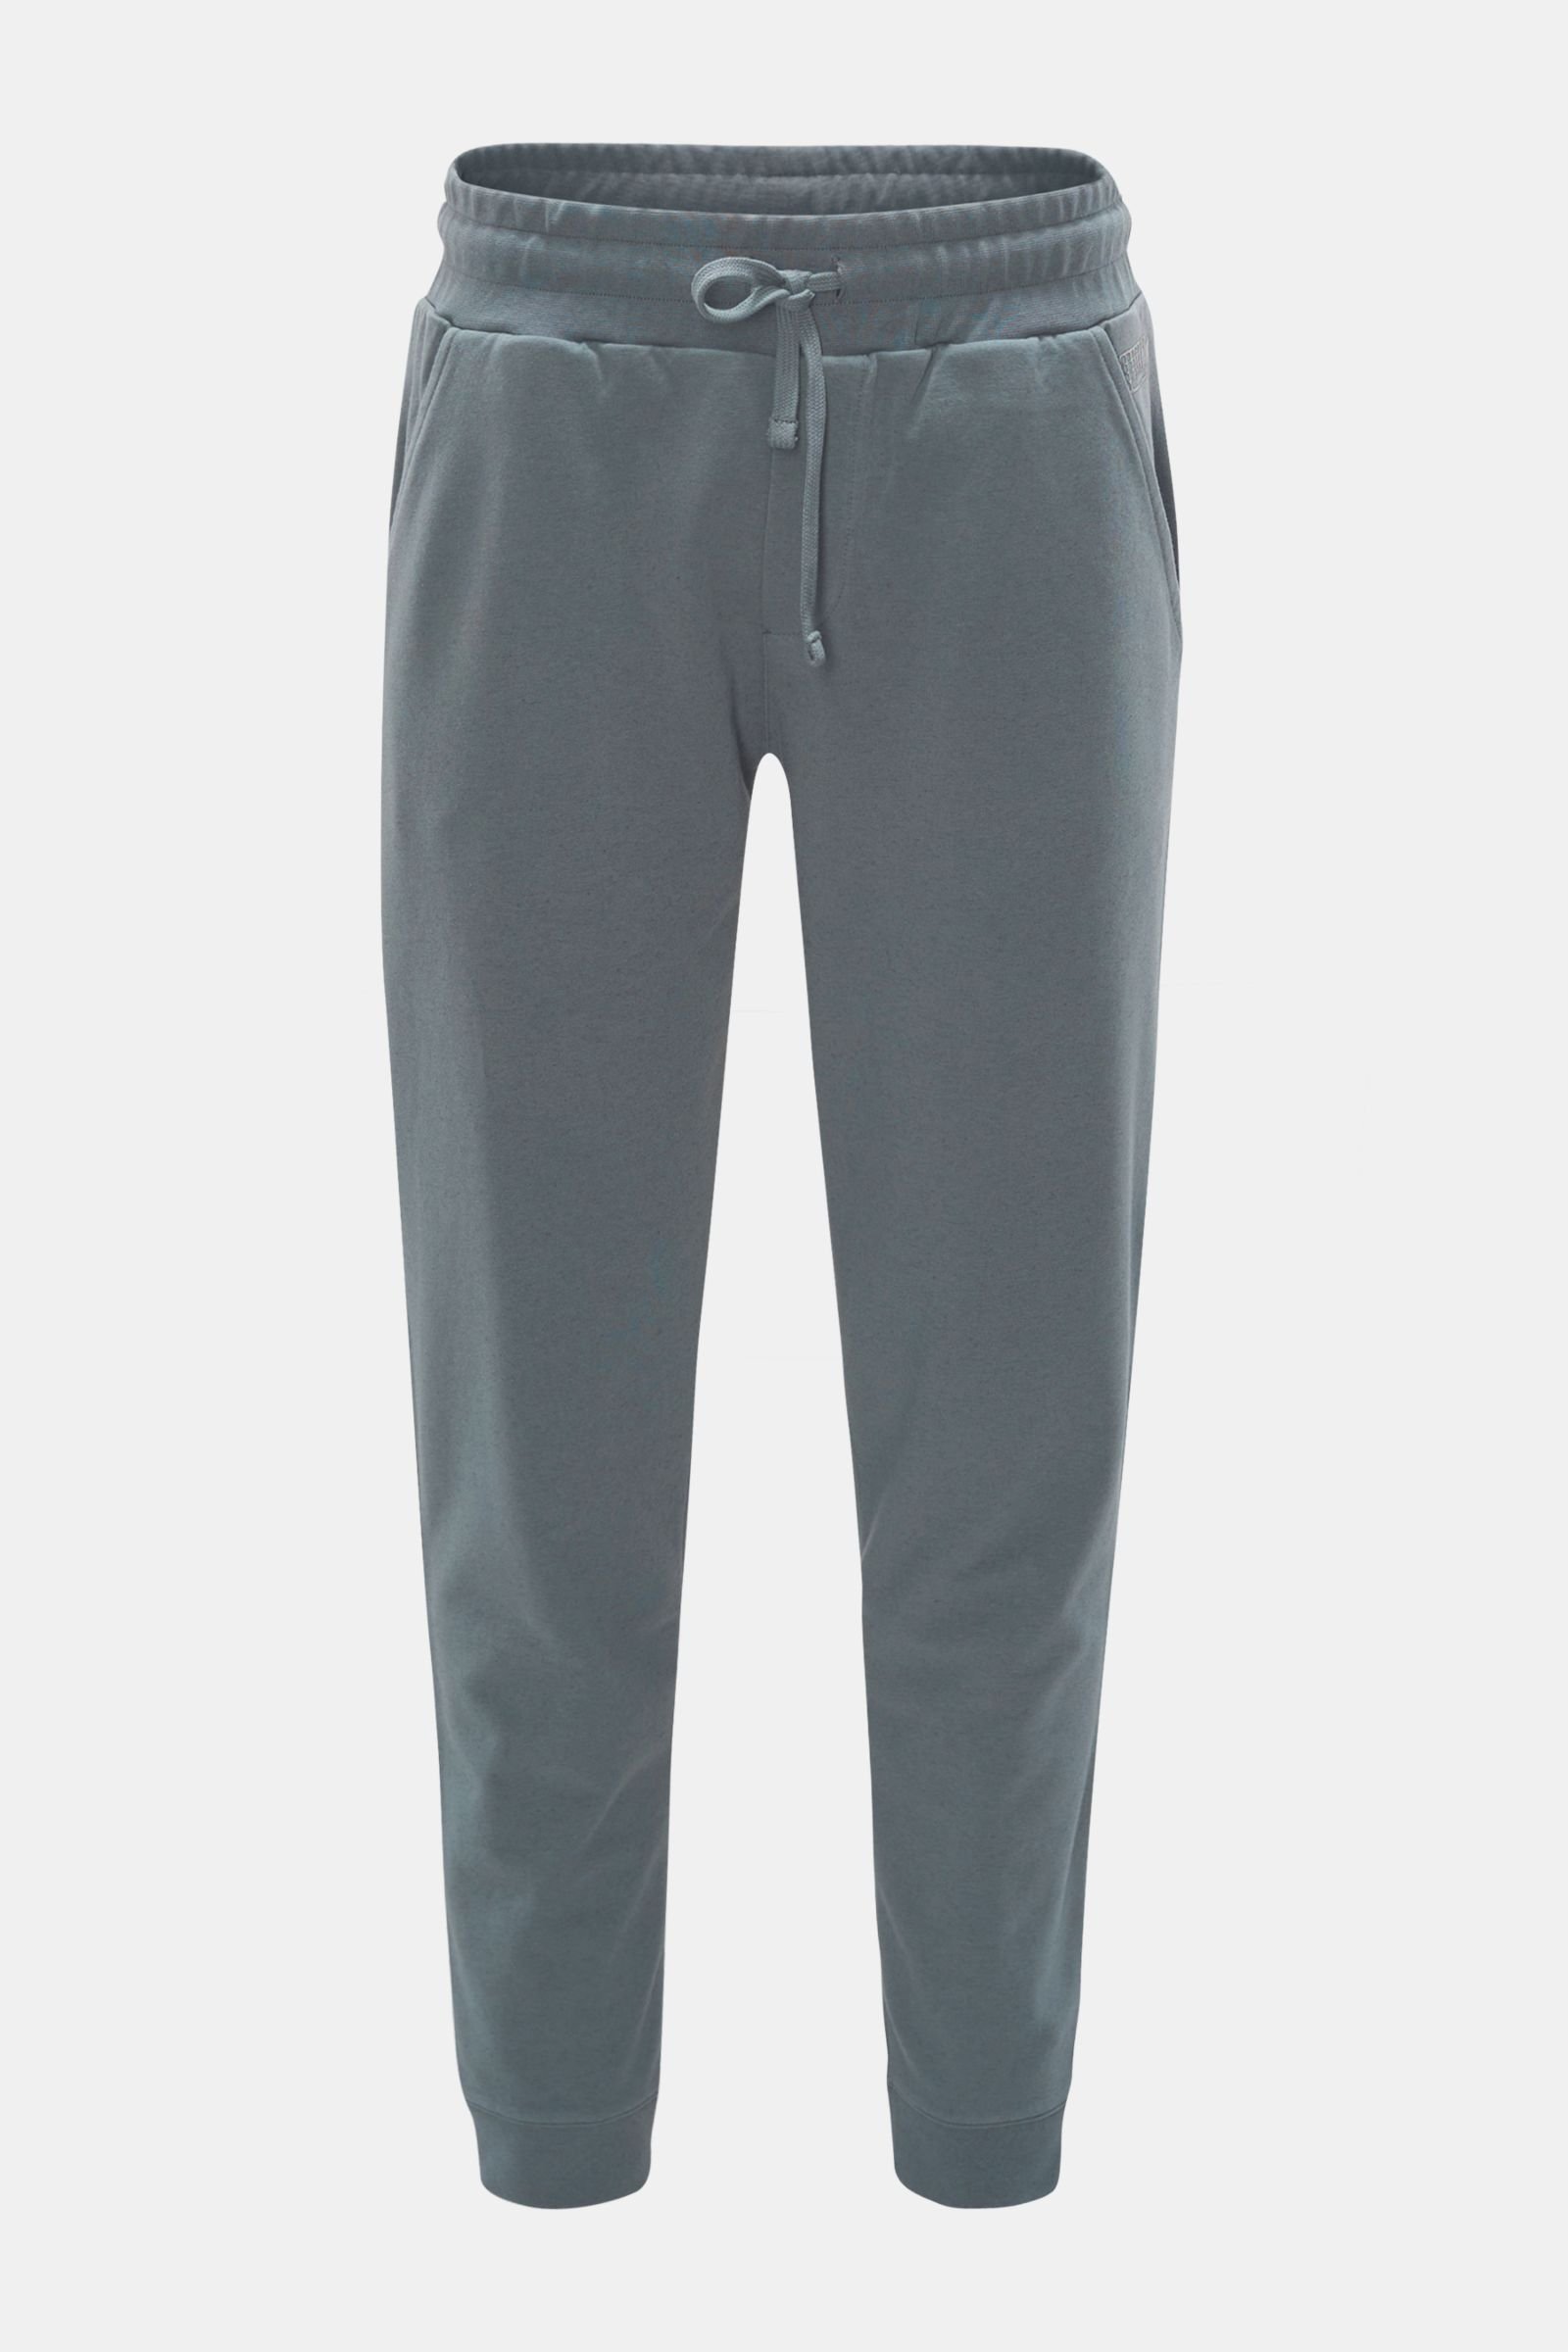 Sweat pants grey-blue